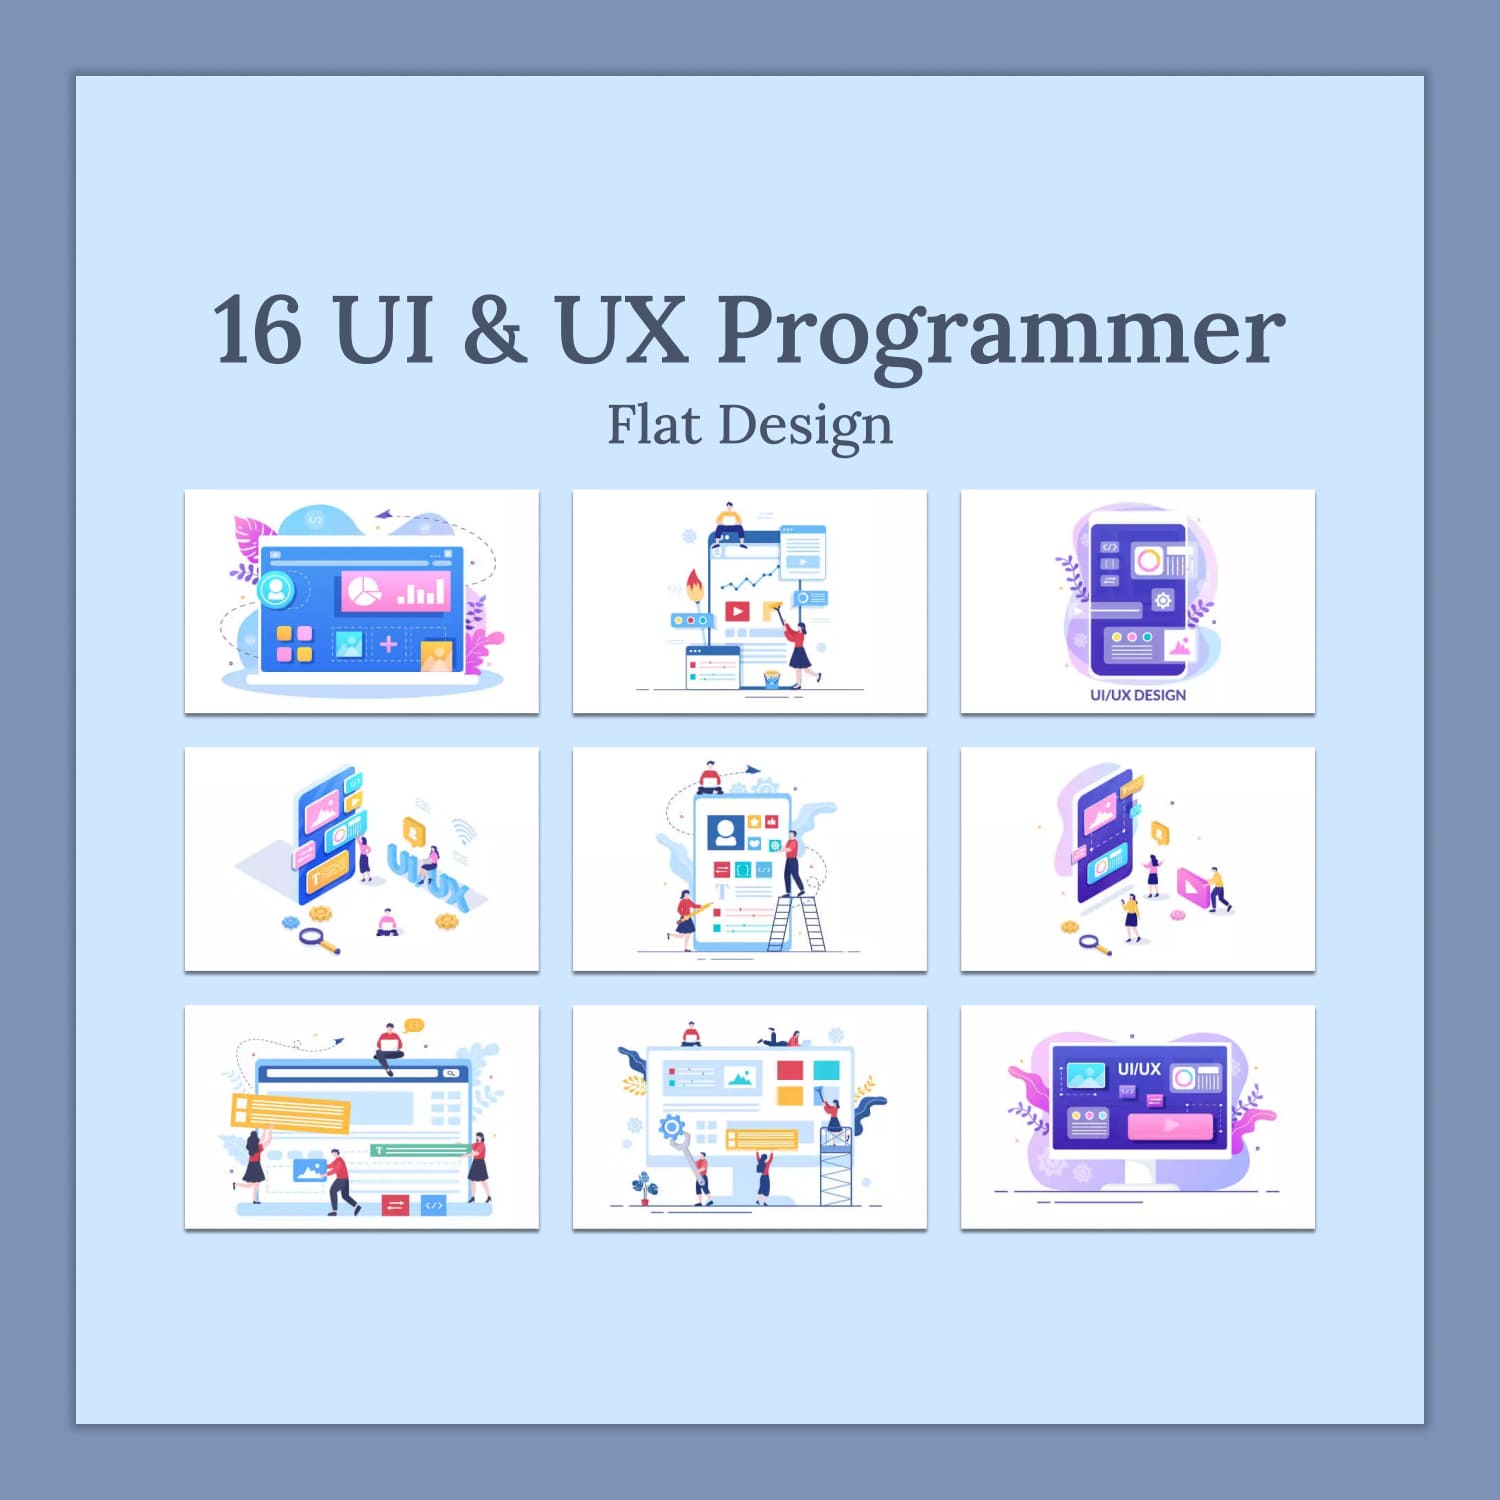 16 UI & UX Programmer Flat Design.